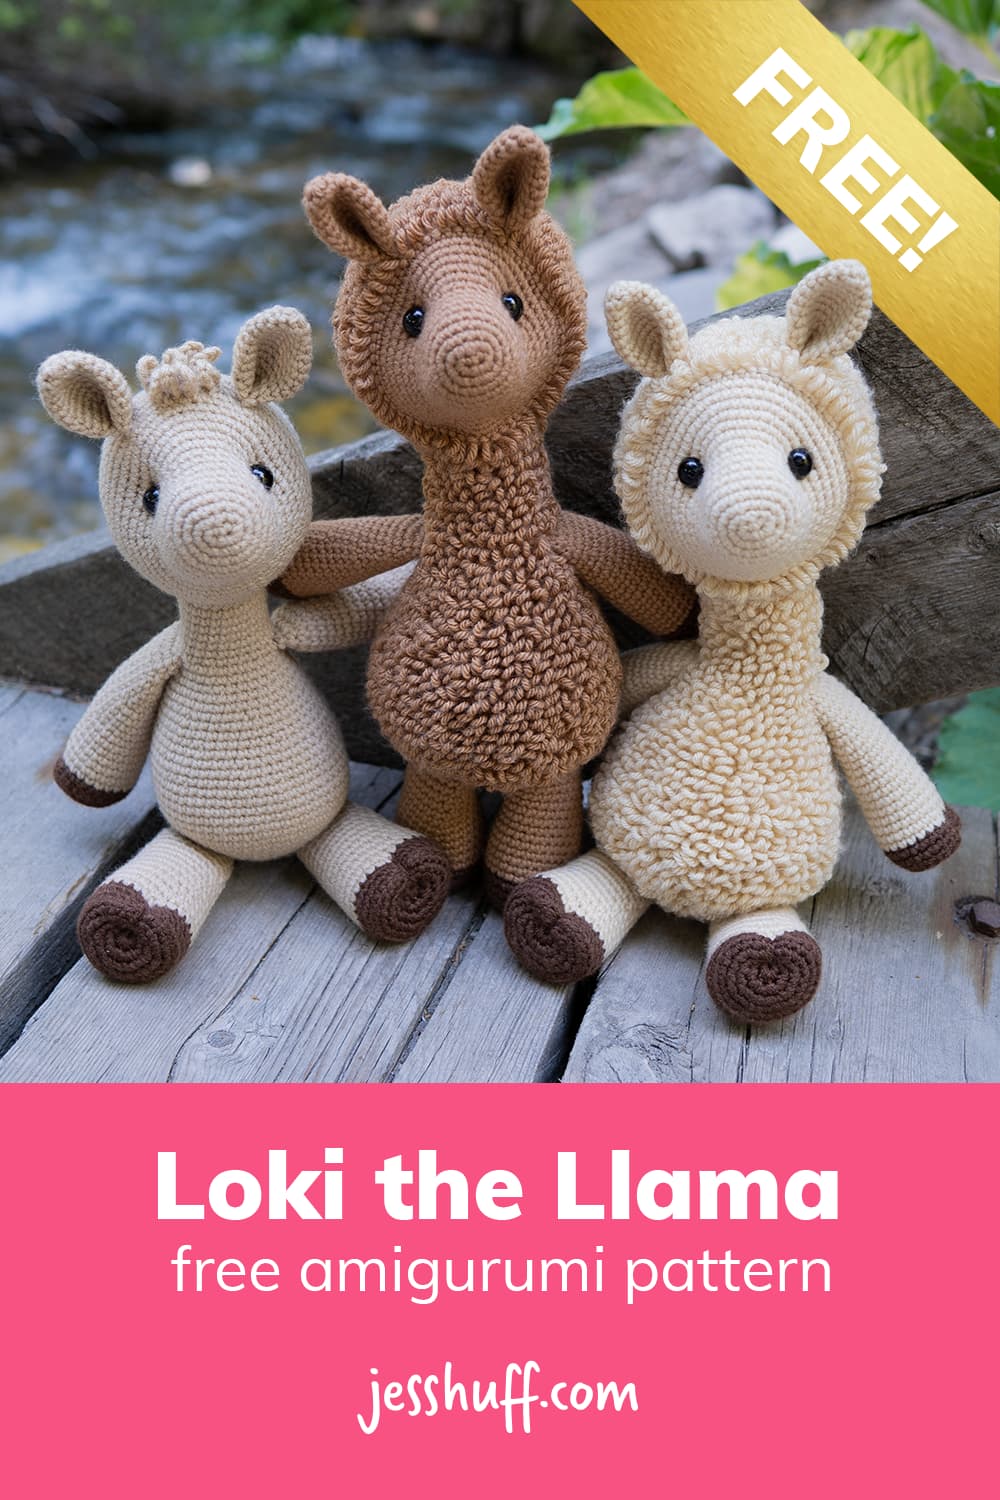 Crochet Llama Pattern Free | Amigurumi alpaca via @heyjesshuff